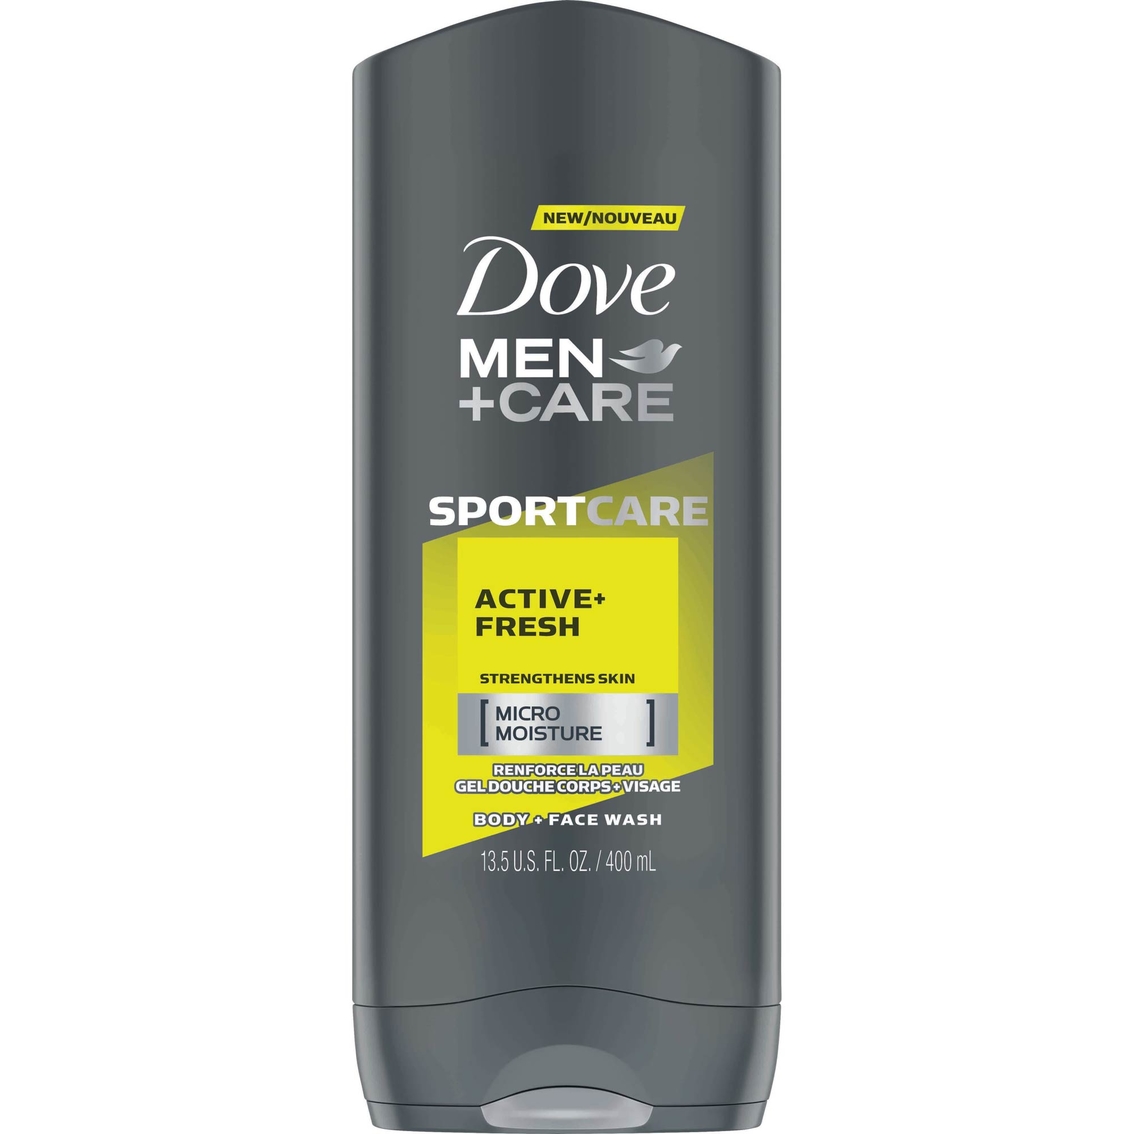 Kelder Potentieel Geestig Dove Men Plus Care Sportcare Active And Fresh Body Wash 13.5 Oz | Body &  Hair Care | Beauty & Health | Shop The Exchange